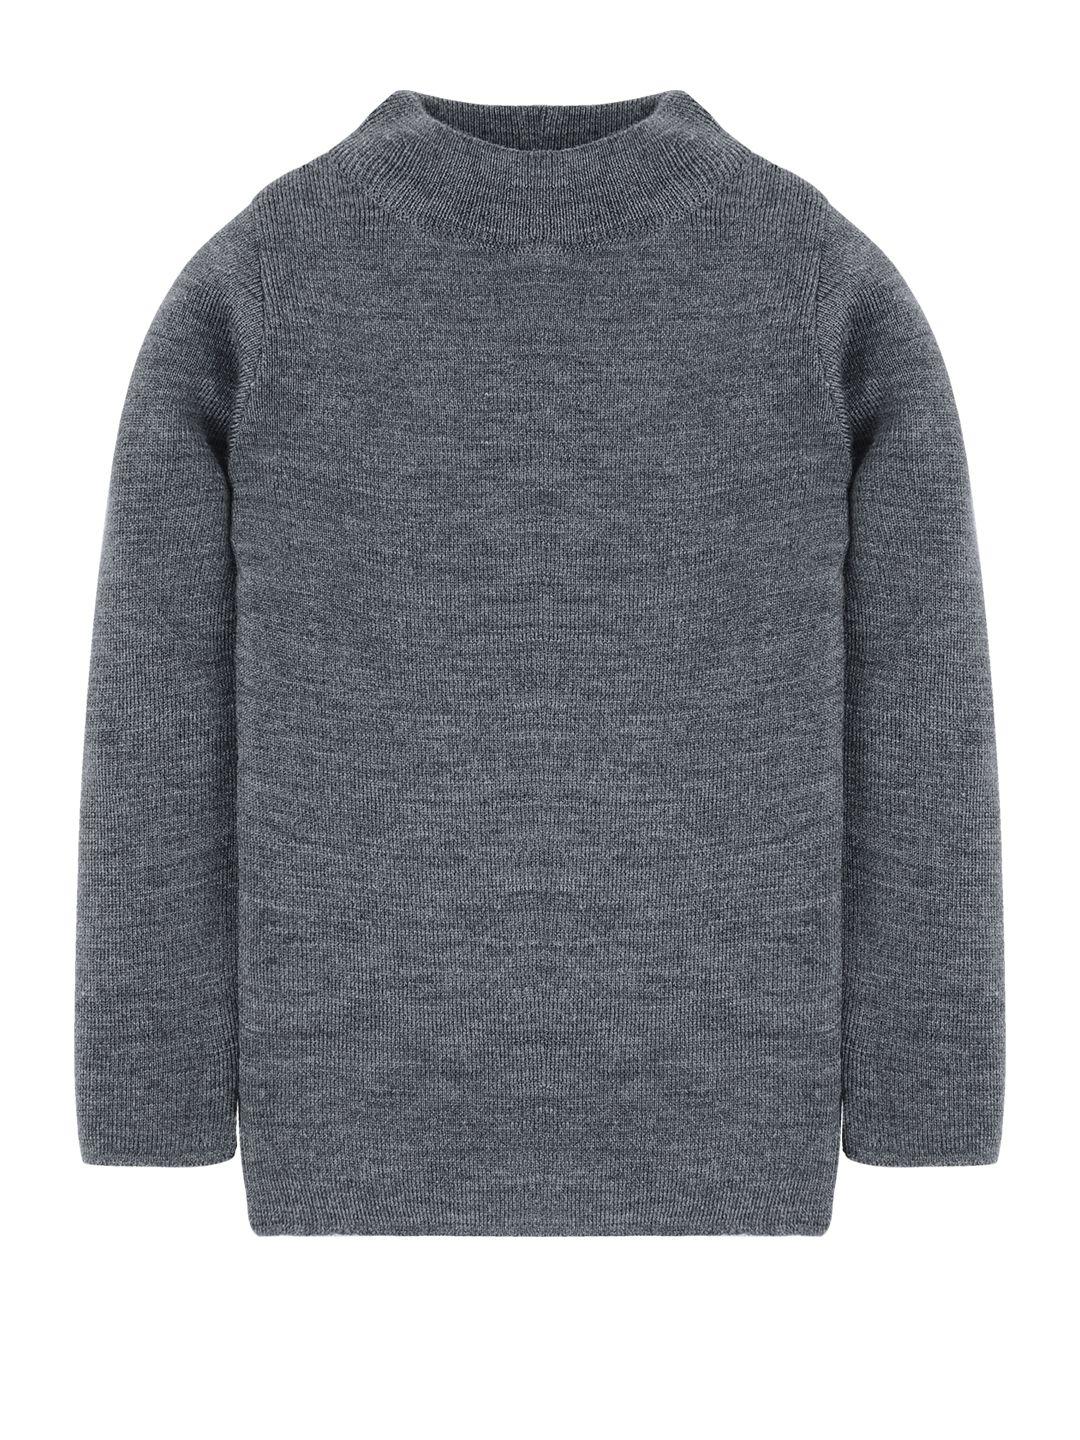 rvk unisex grey solid sweater